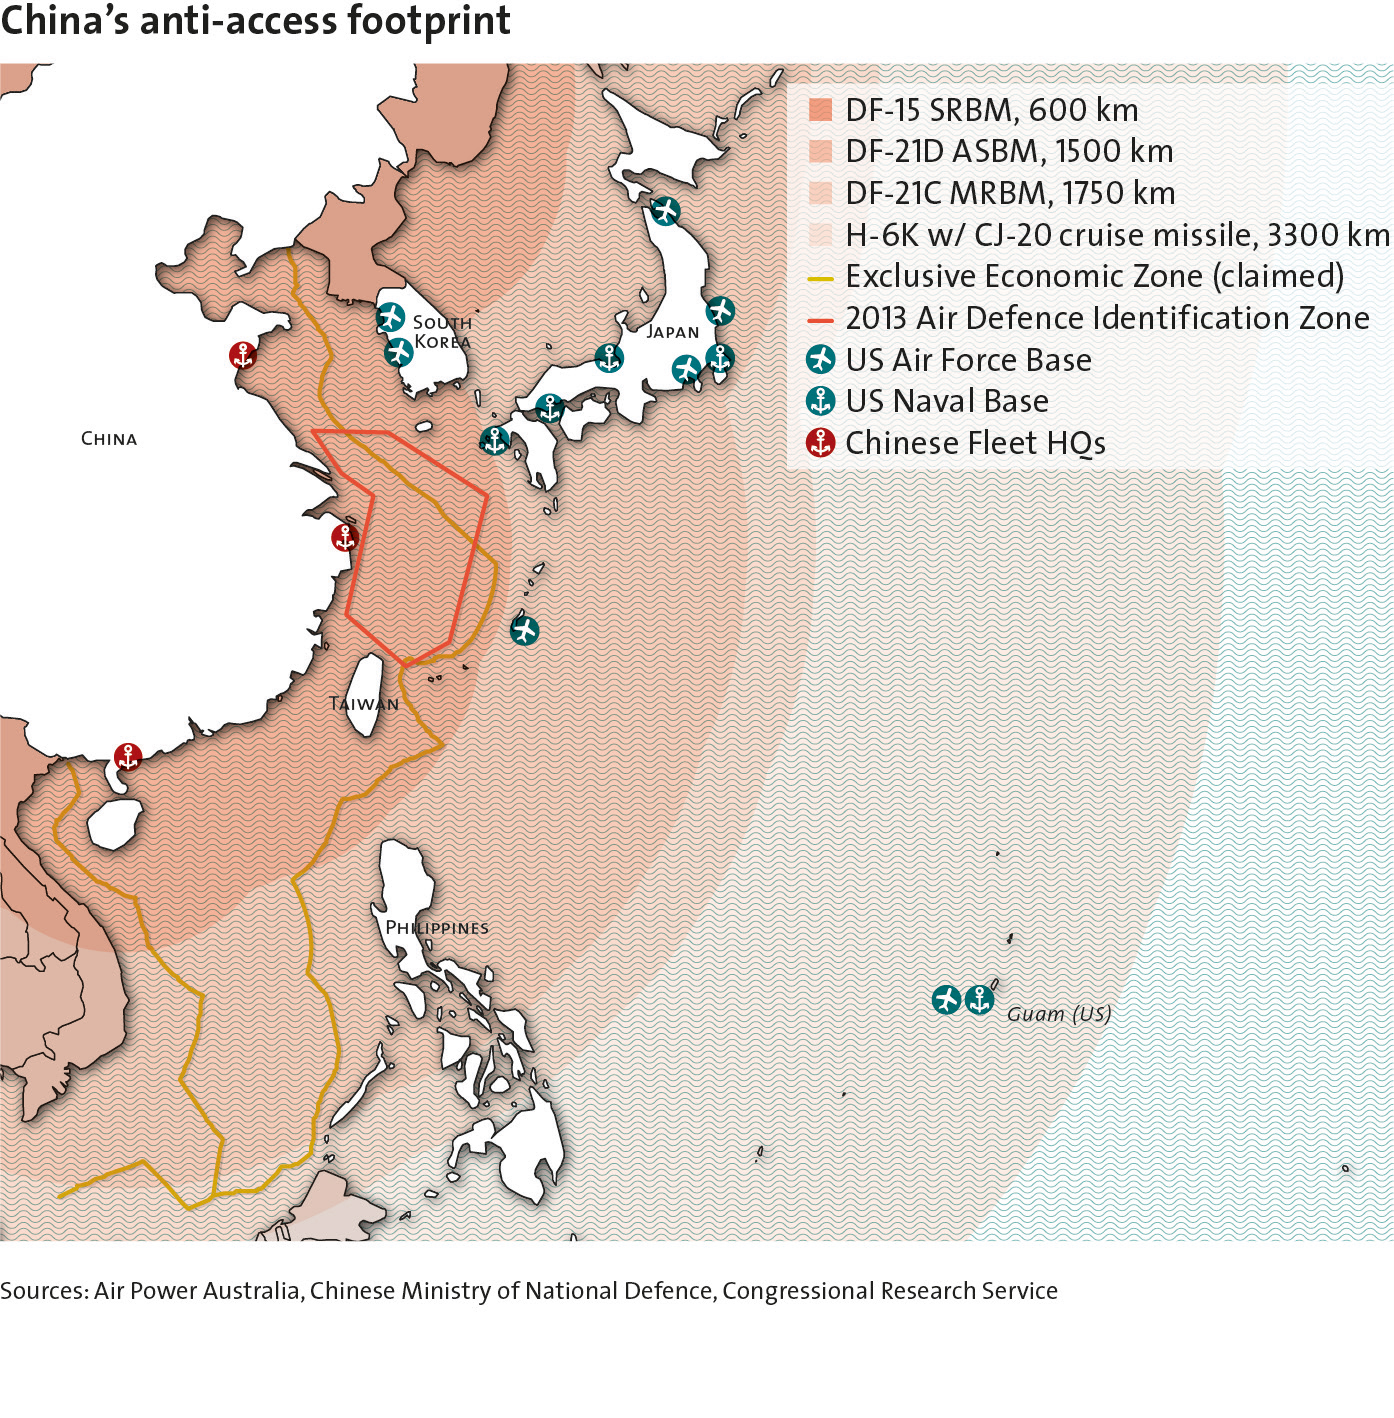 Enlarged view: Map of China's Anti-access footprint